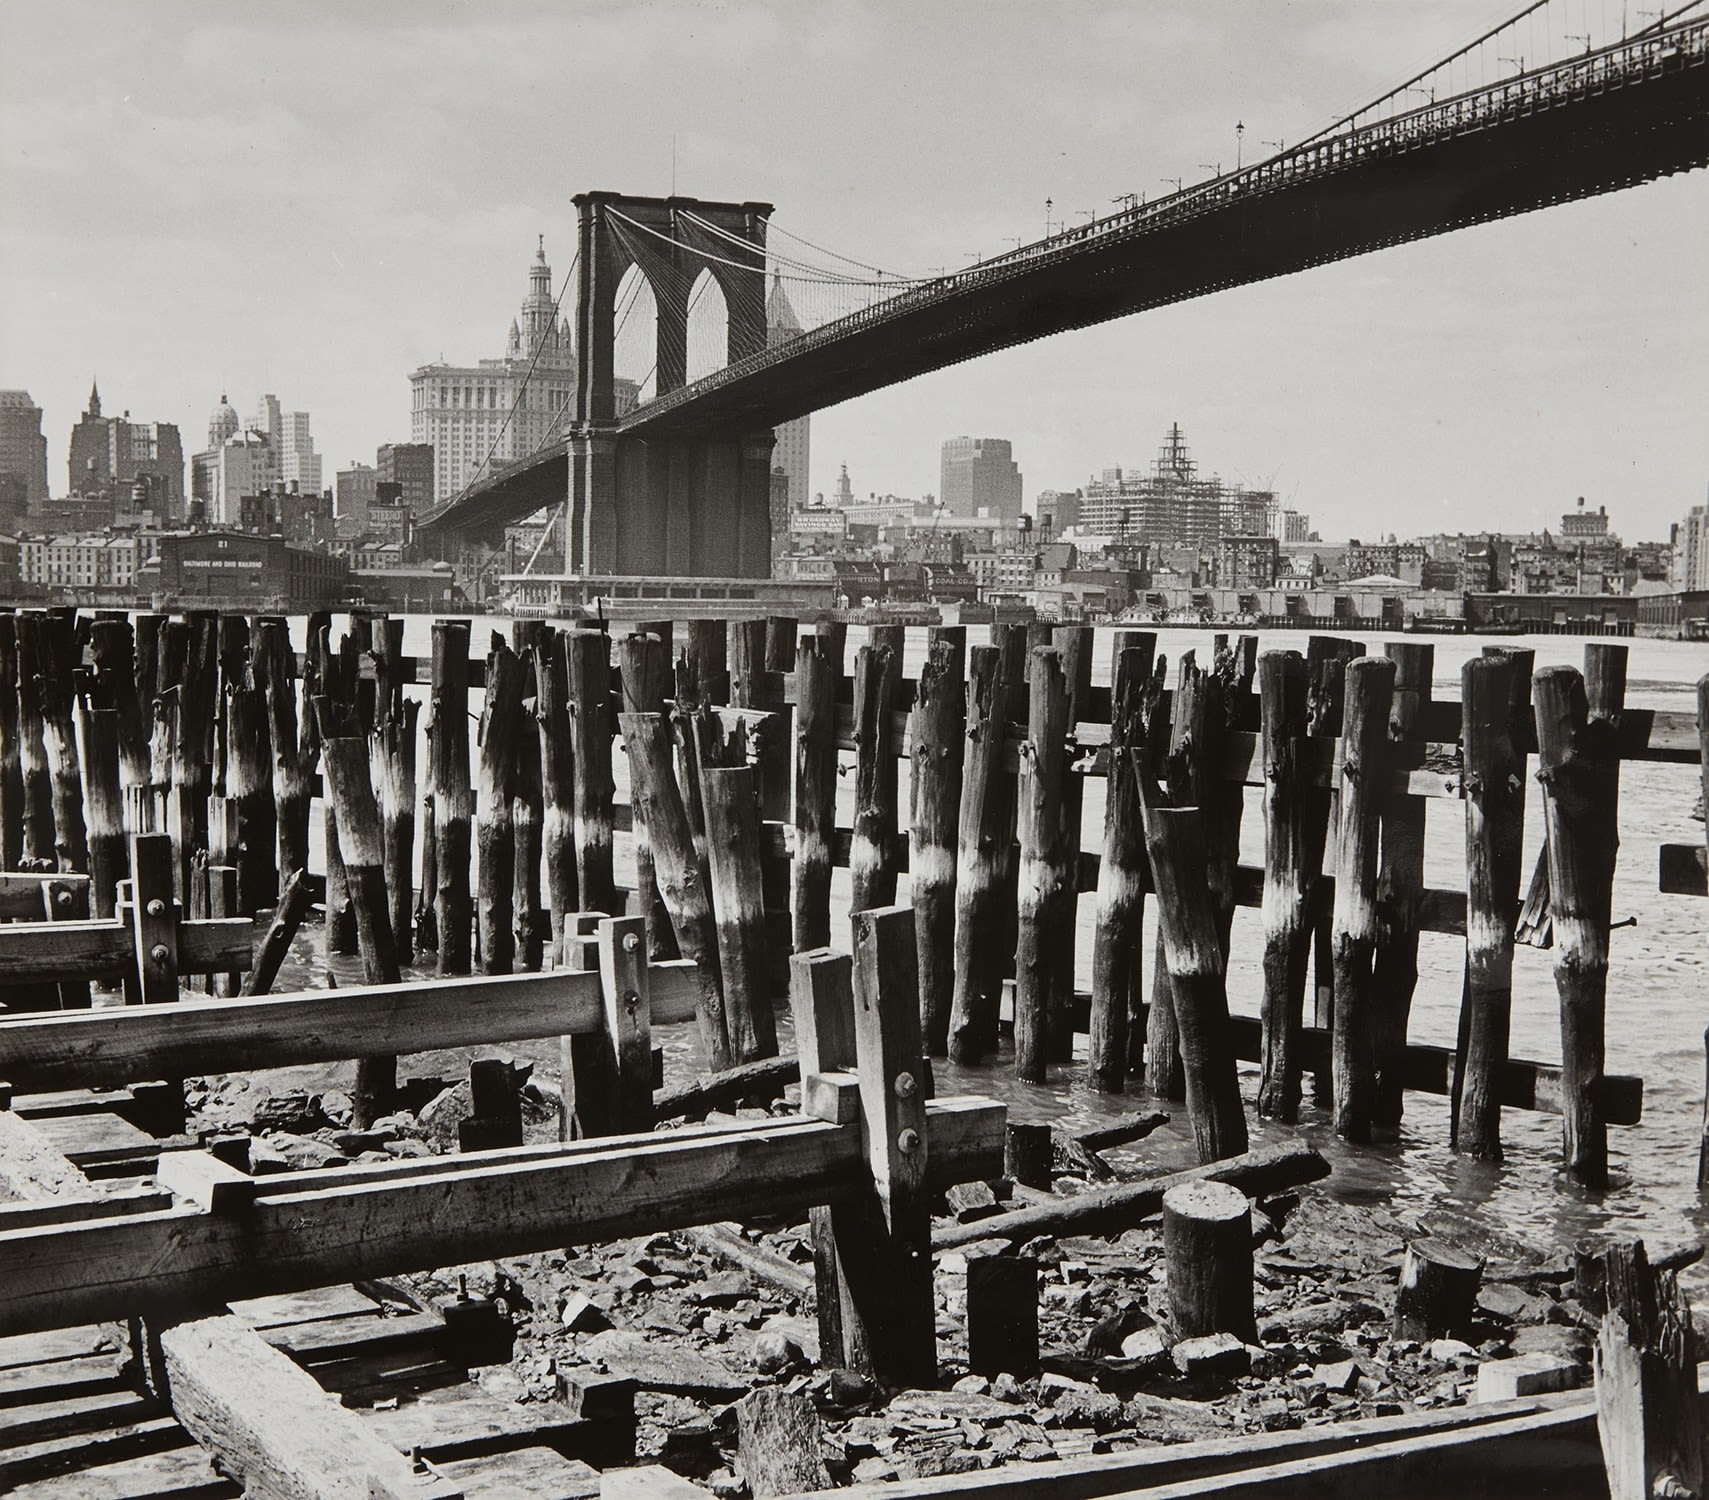 N.Y. Brooklyn Bridge from Brooklyn Shore - Andreas Feininger